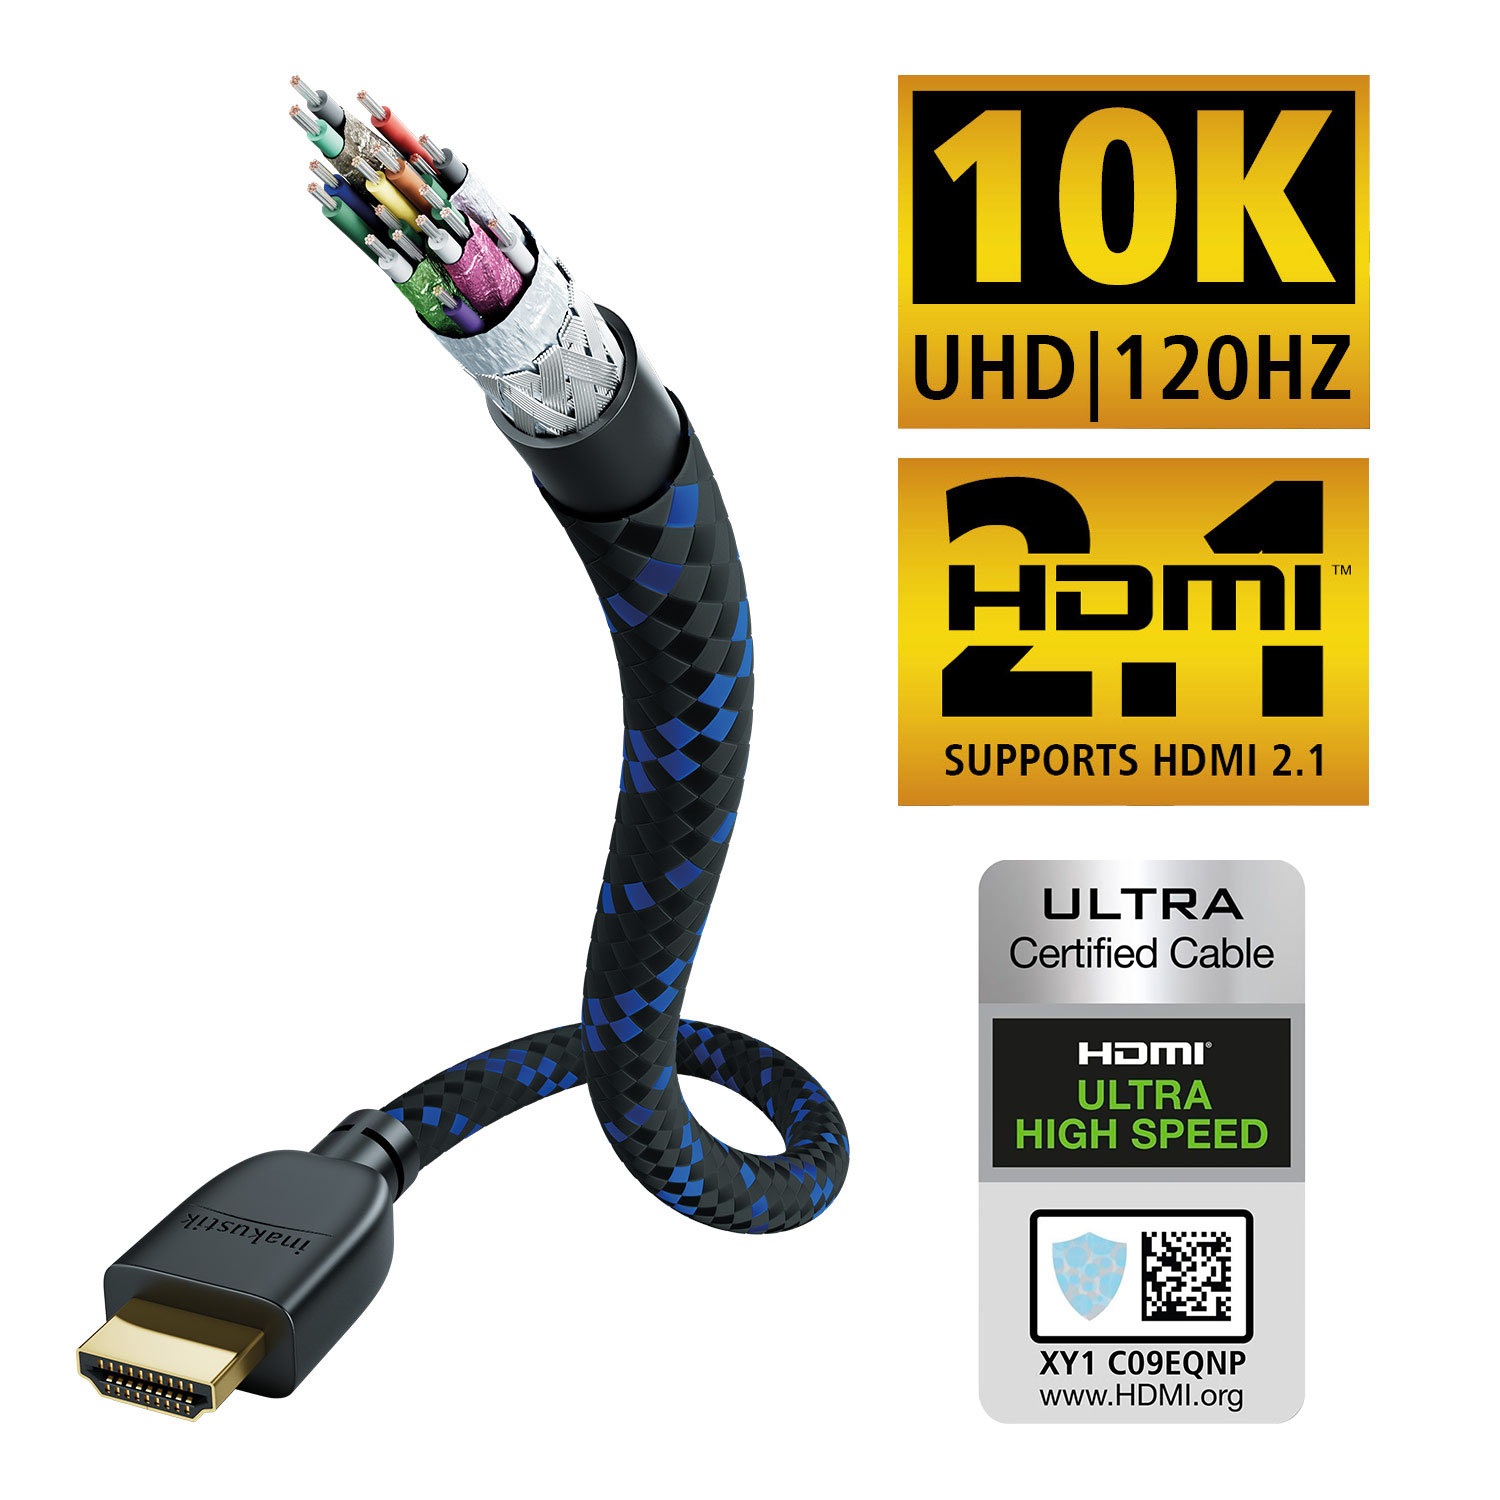 Cable HDMI 8K Ultra HD 2.1 - Power A - 3 Mètres